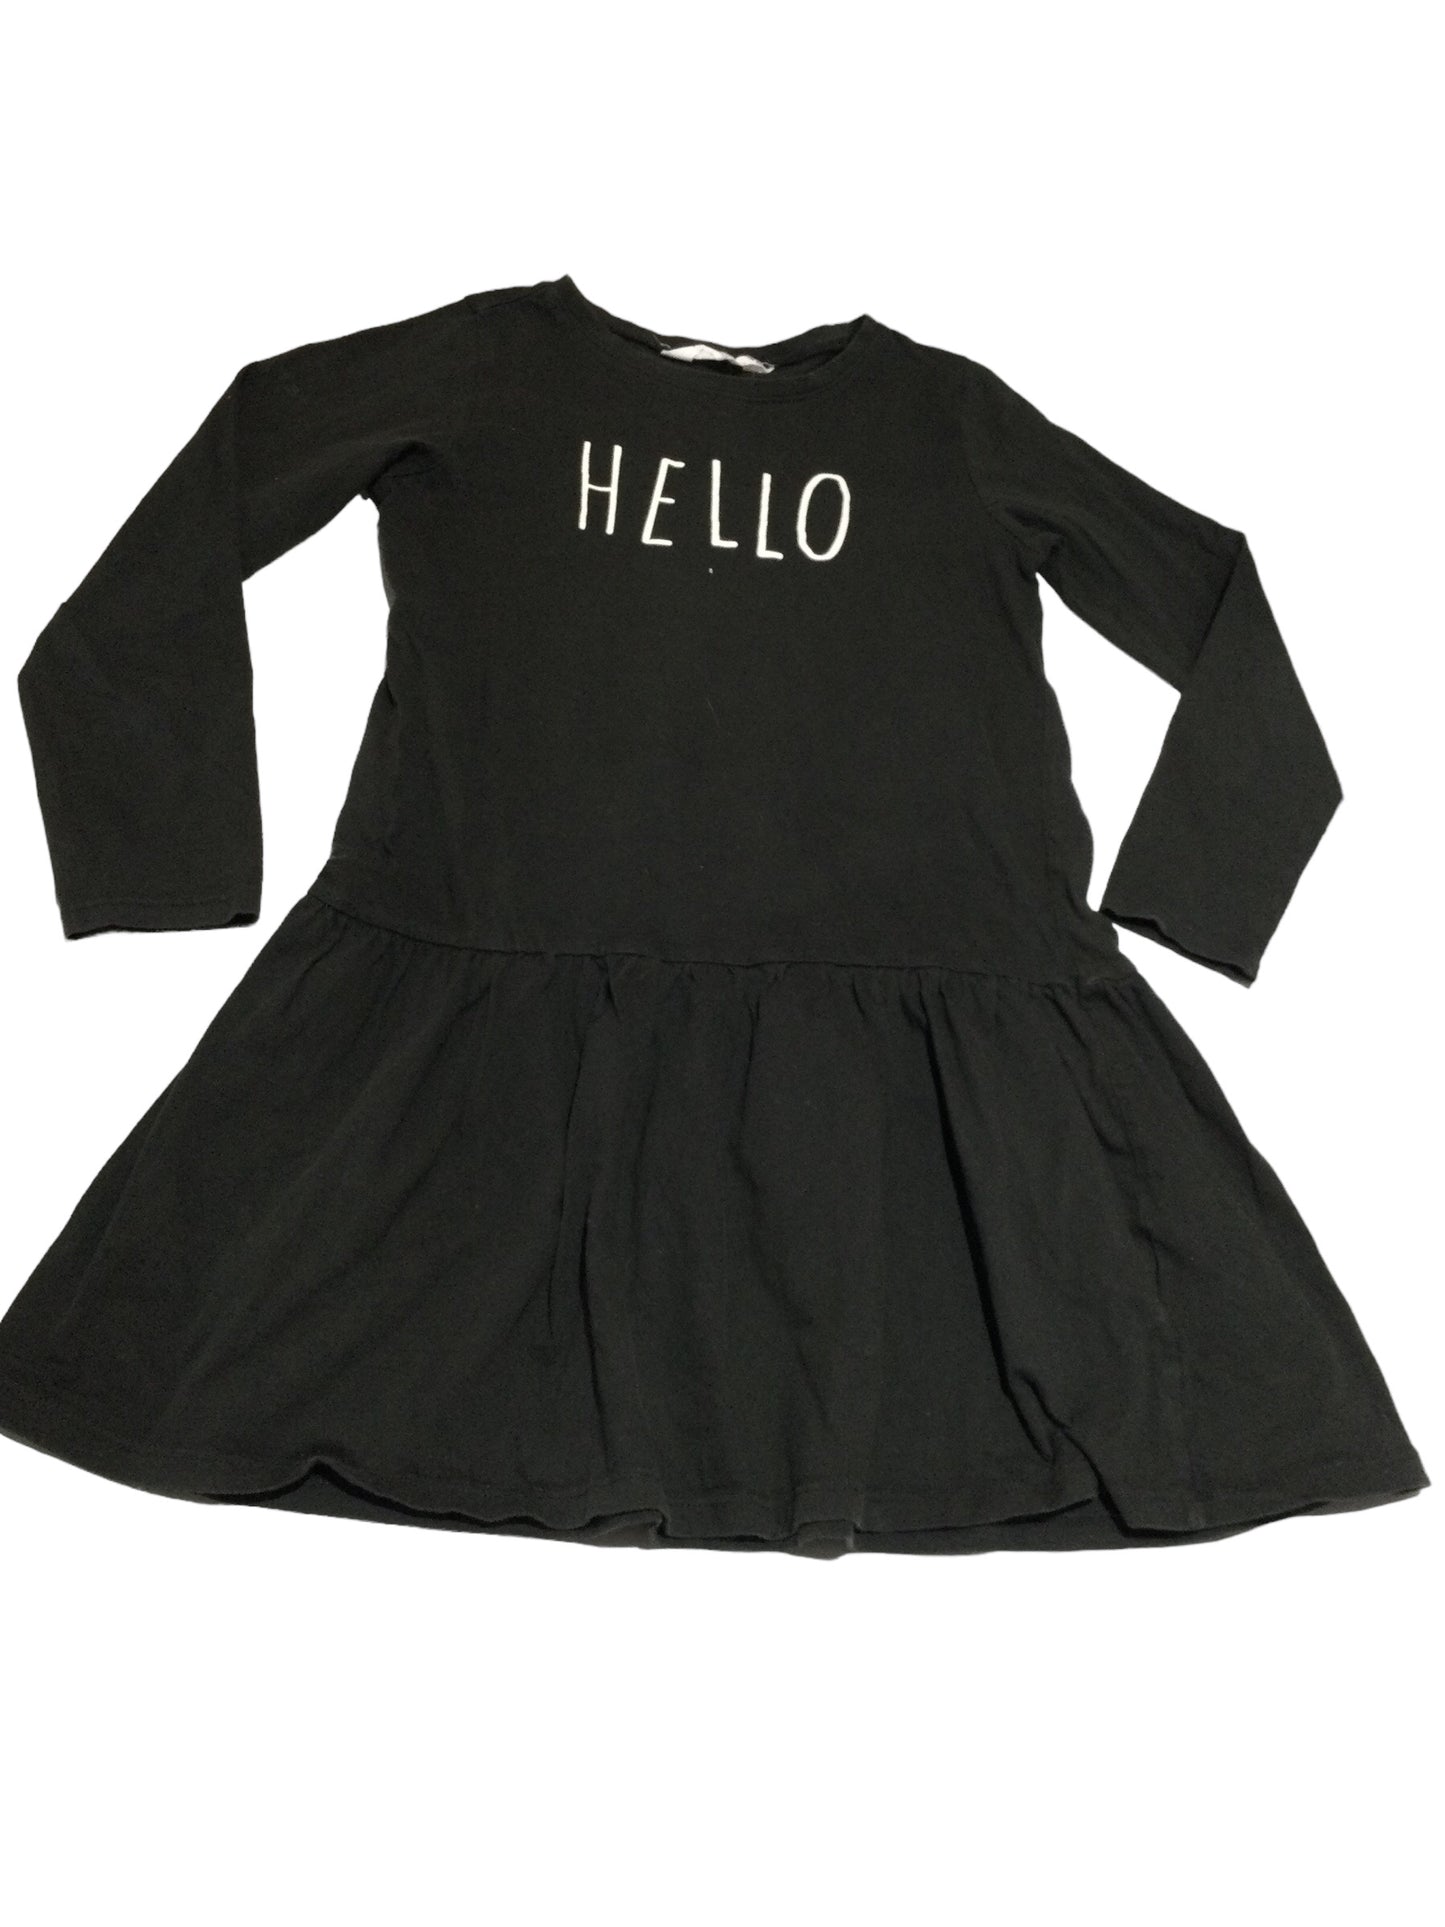 Hello Dress, size 8-9